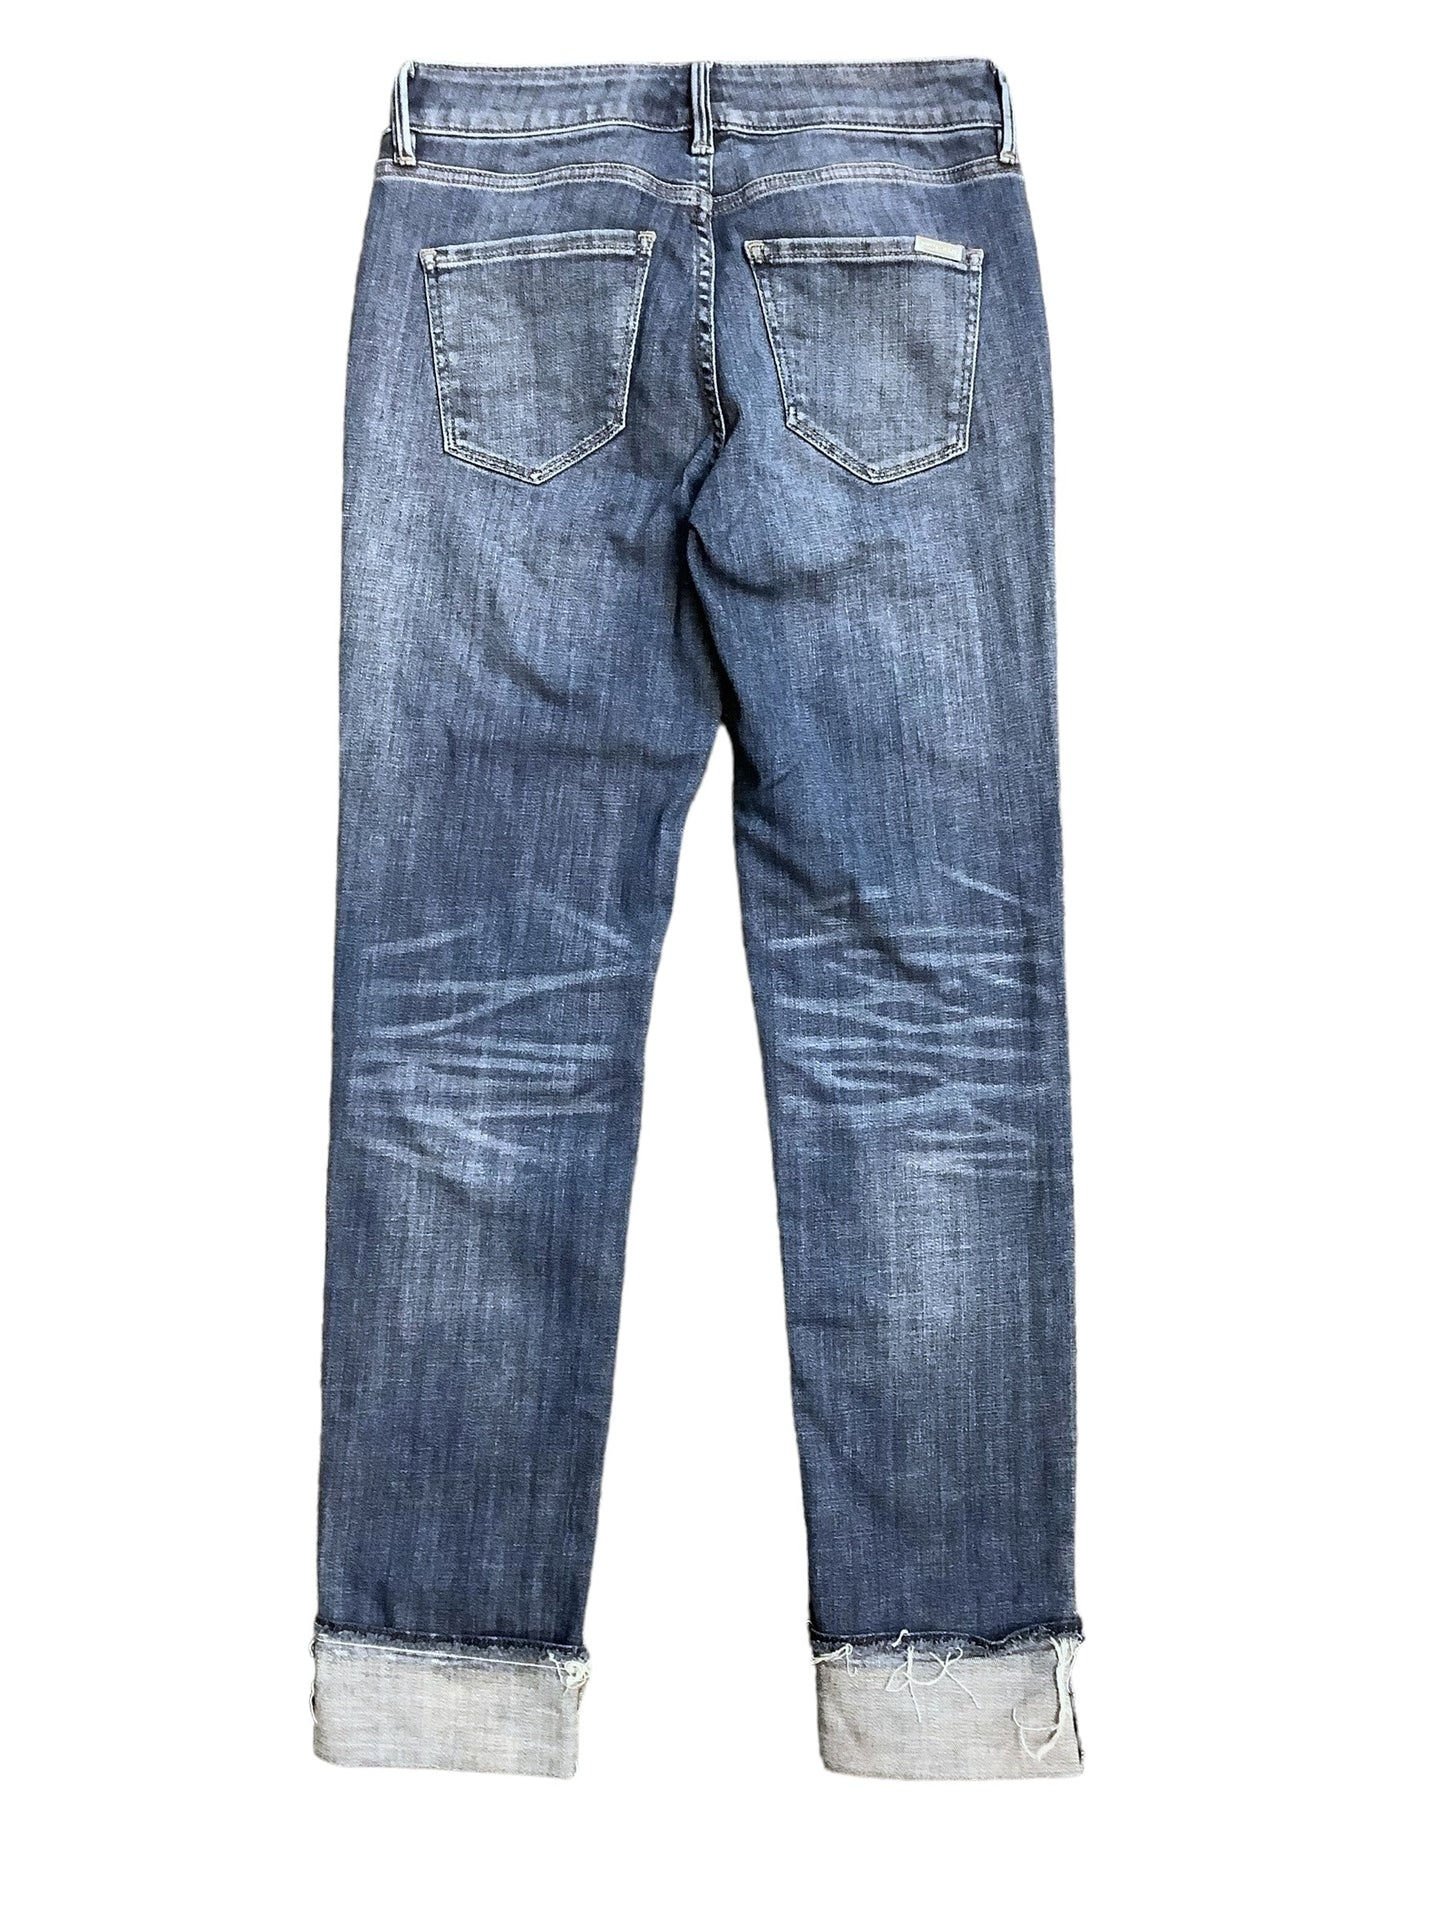 Jeans Skinny By White House Black Market  Size: 2